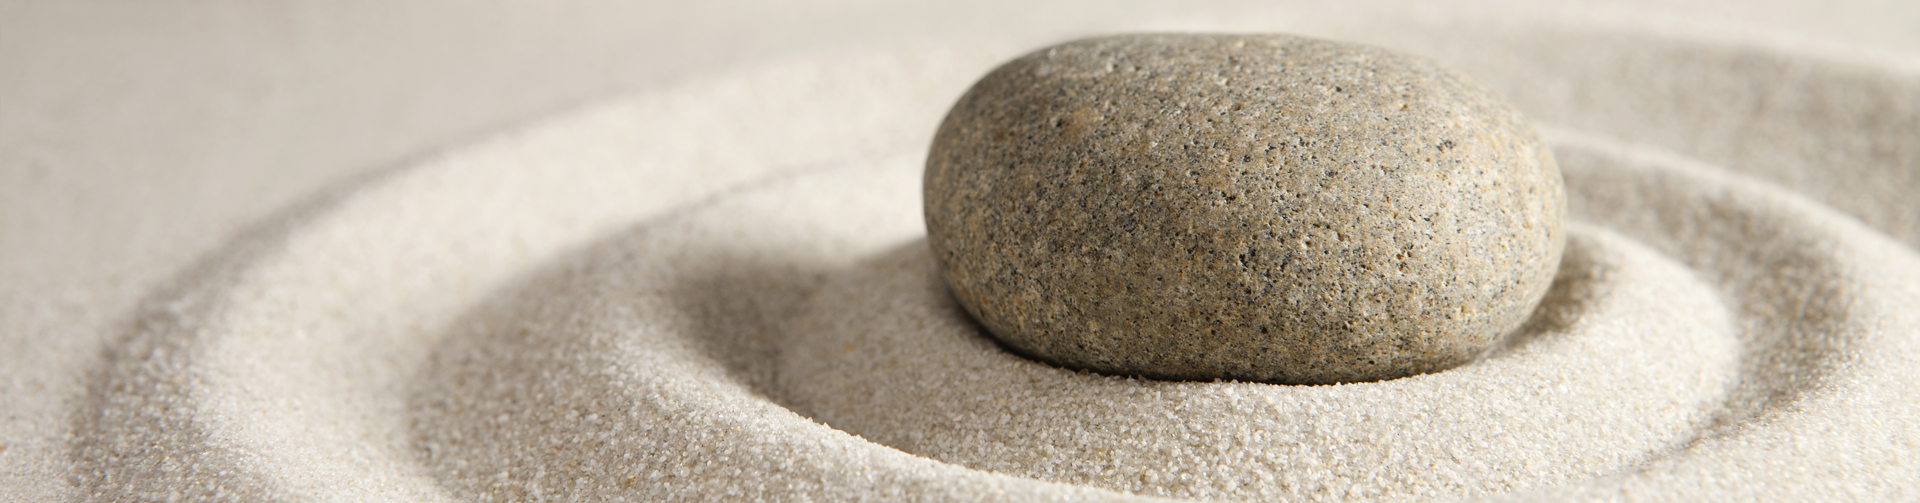  Stone on Sand Garden